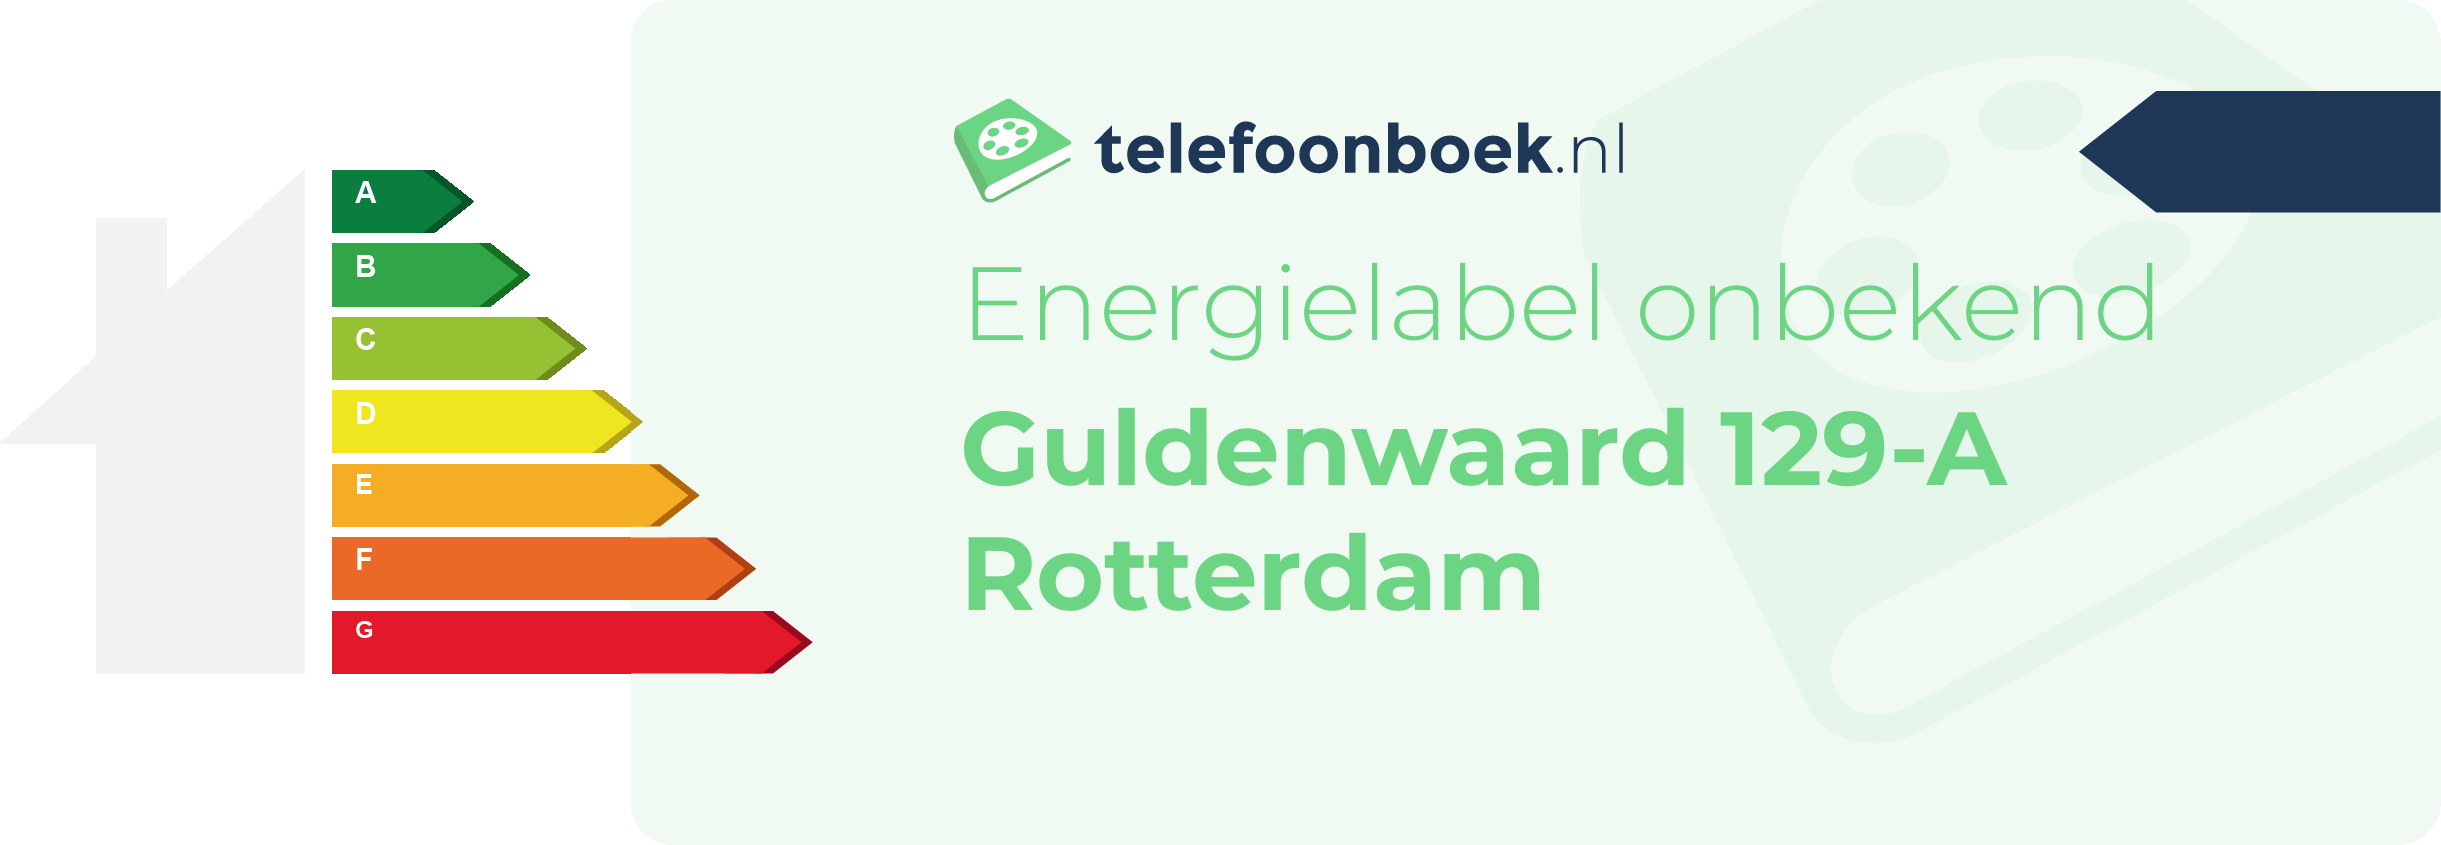 Energielabel Guldenwaard 129-A Rotterdam